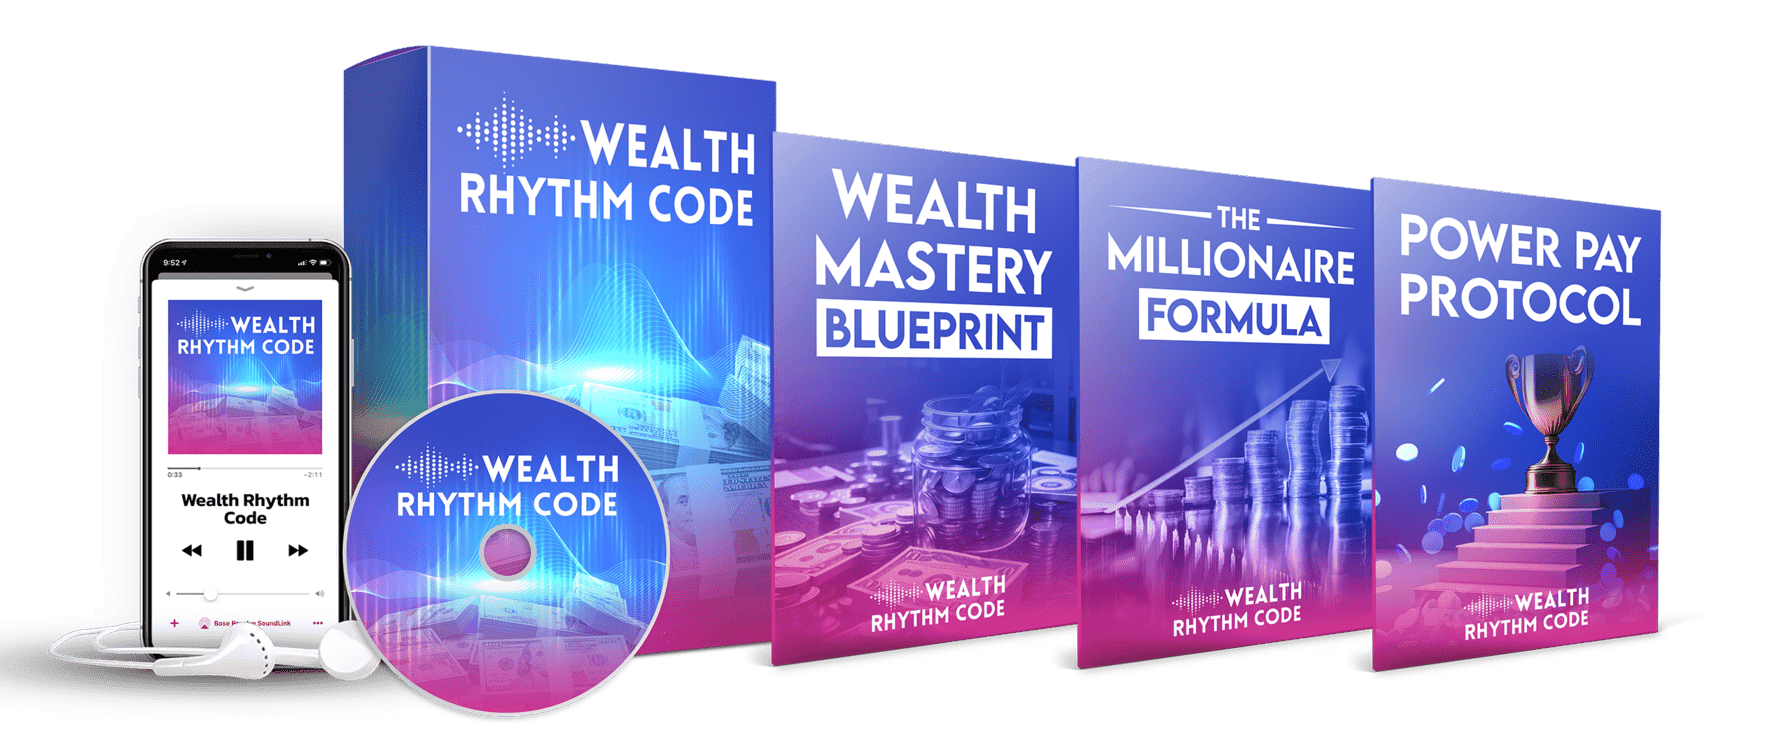 wealth-rhythm-code-review-bundle